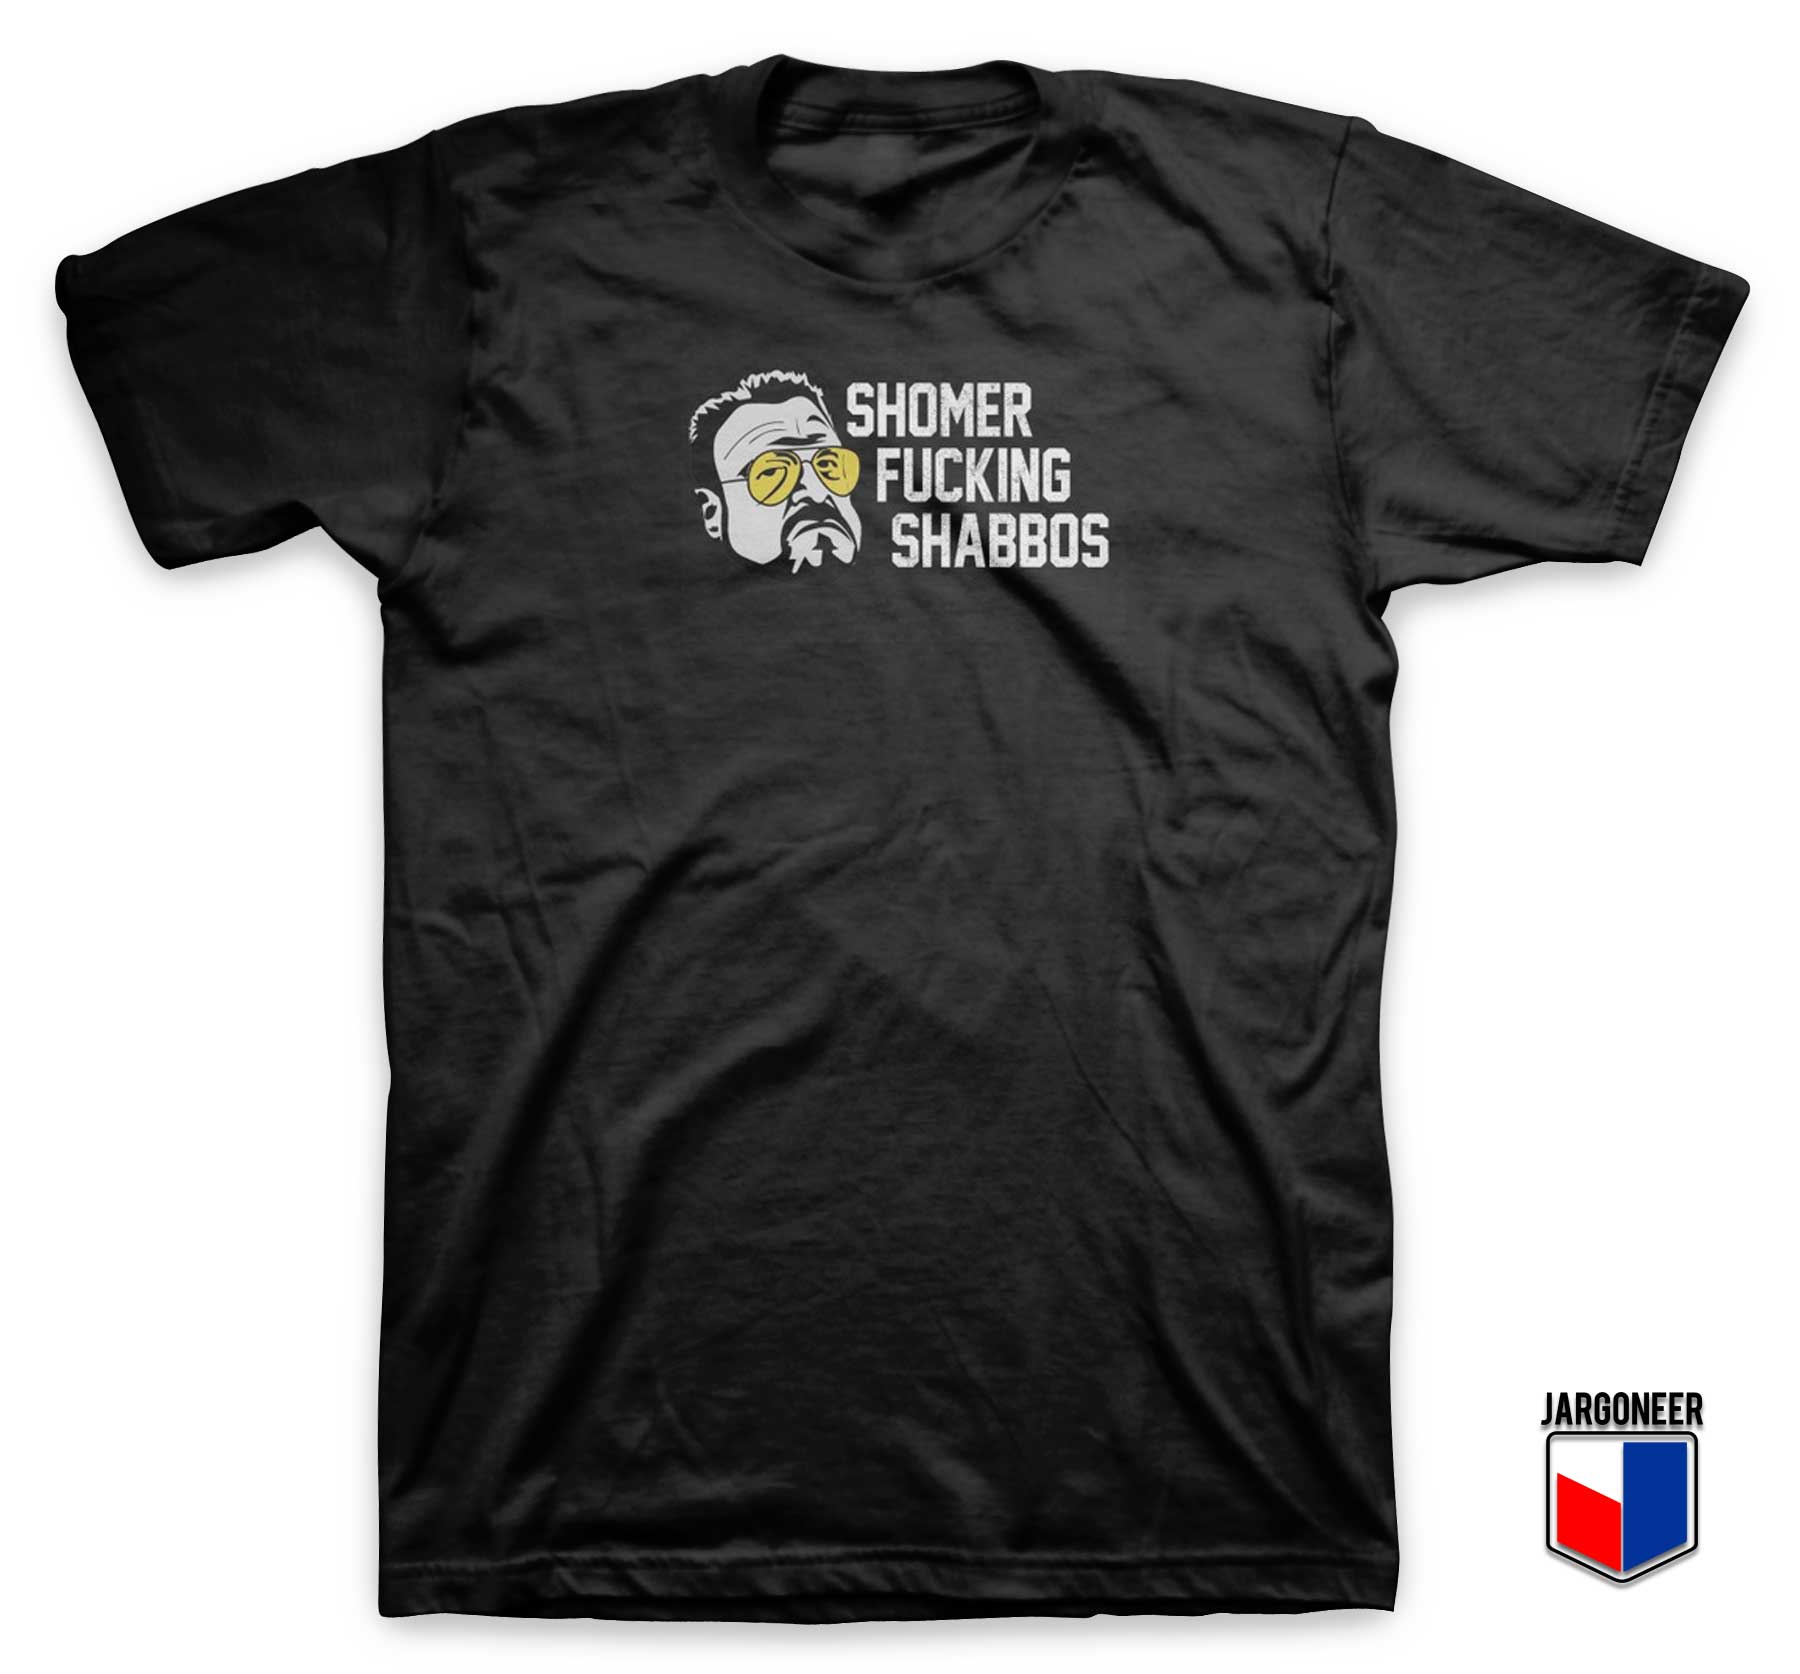 Shomer Fucking Shabbos T Shirt - Shop Unique Graphic Cool Shirt Designs